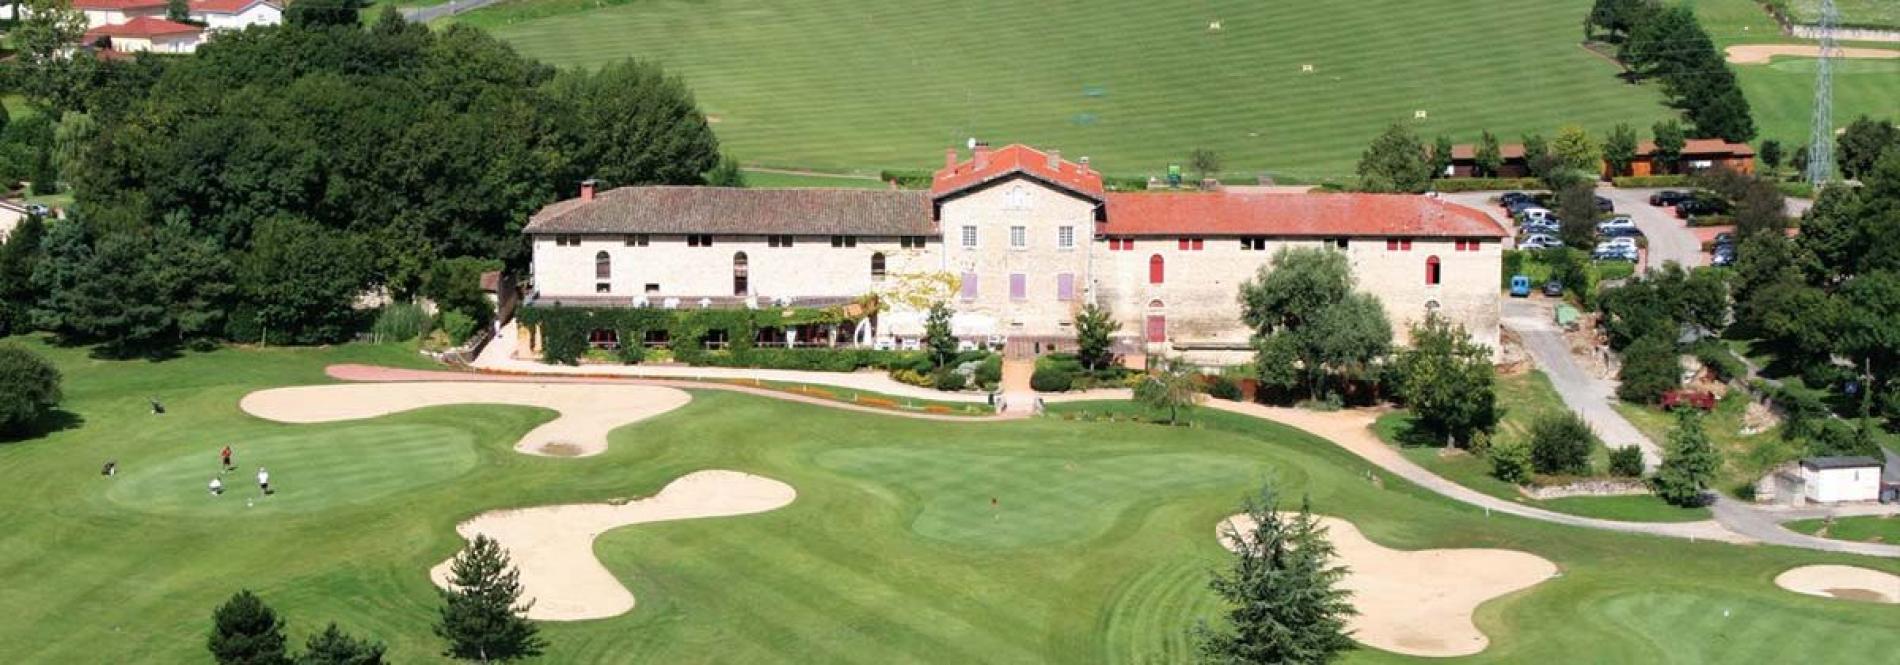 The Beaujolais golf course